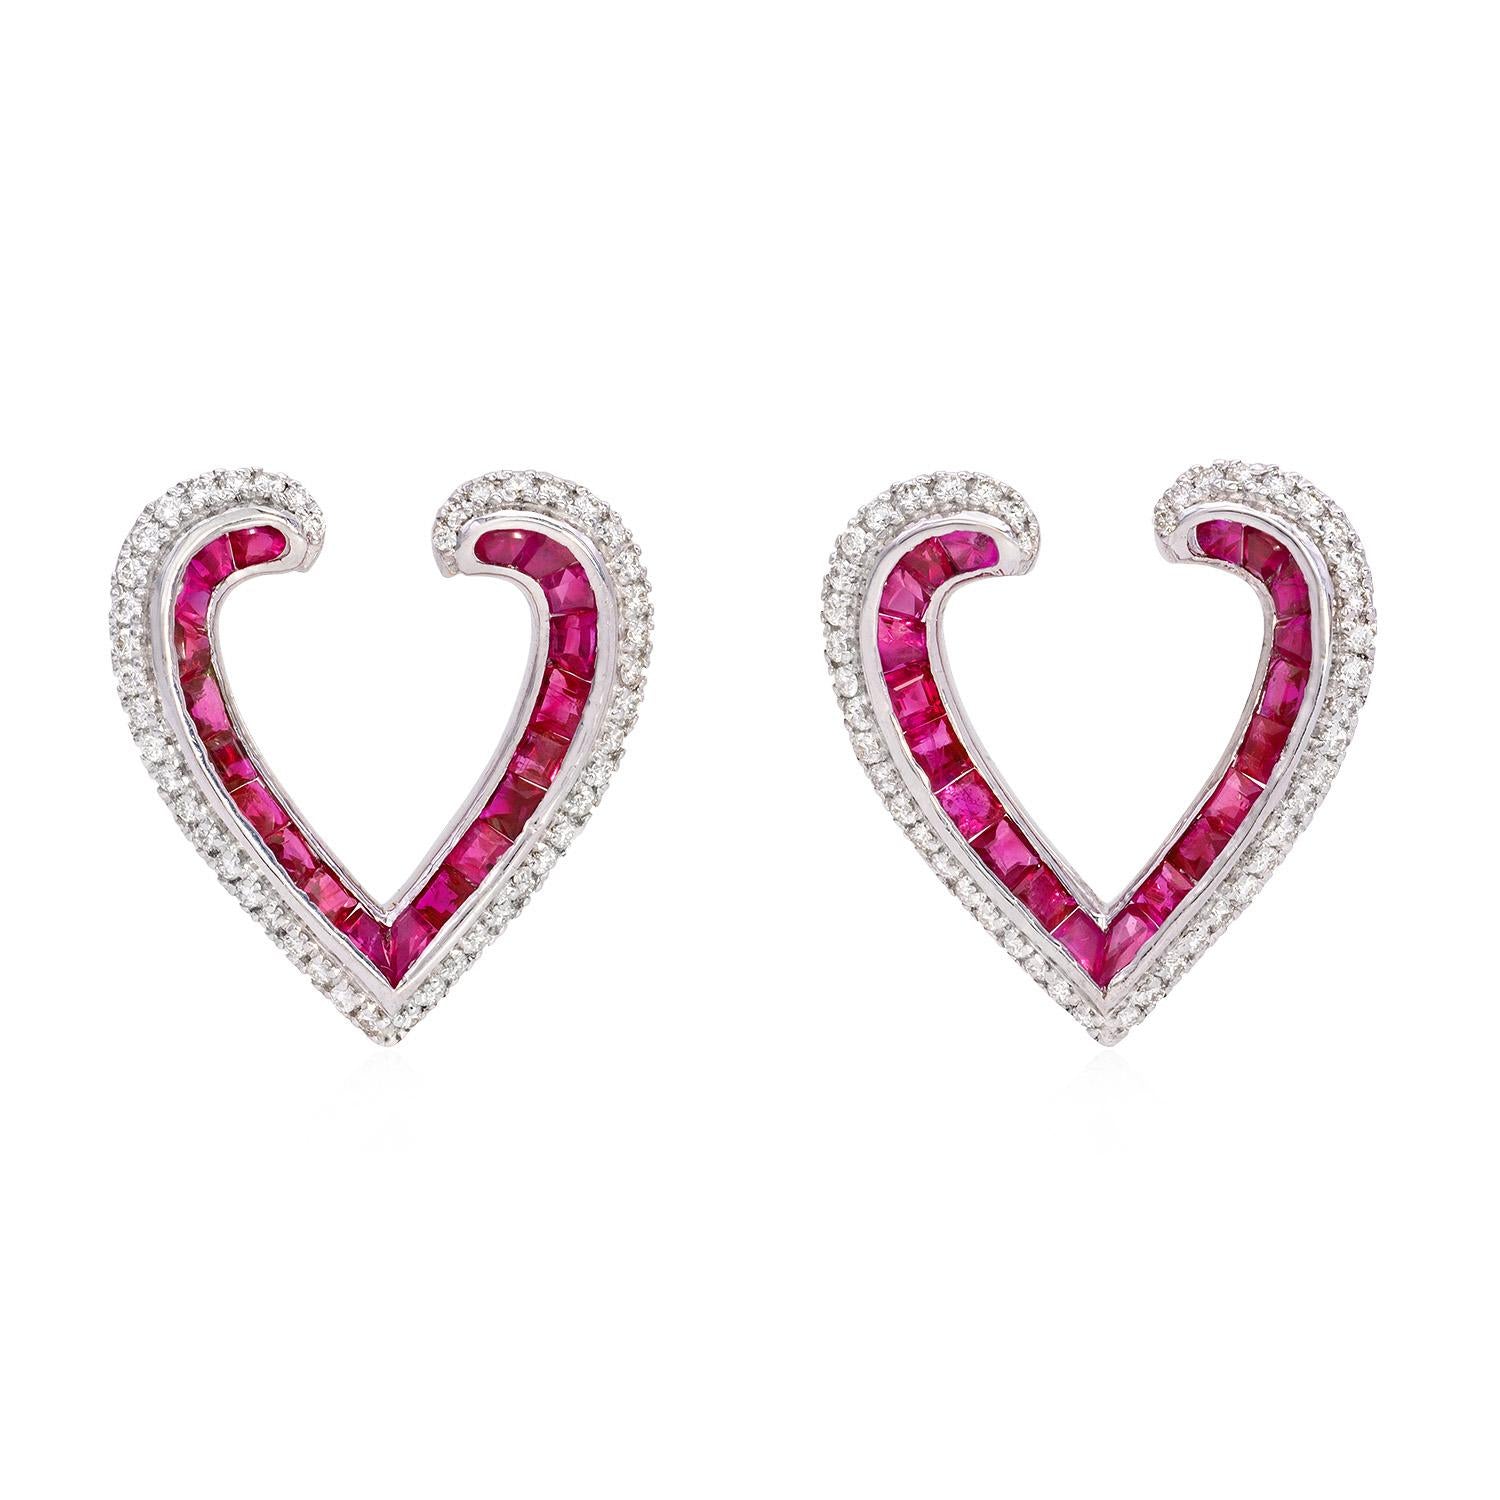 1.4 Carat Ruby and 0.71 Carat Diamond Heart Shaped Studs